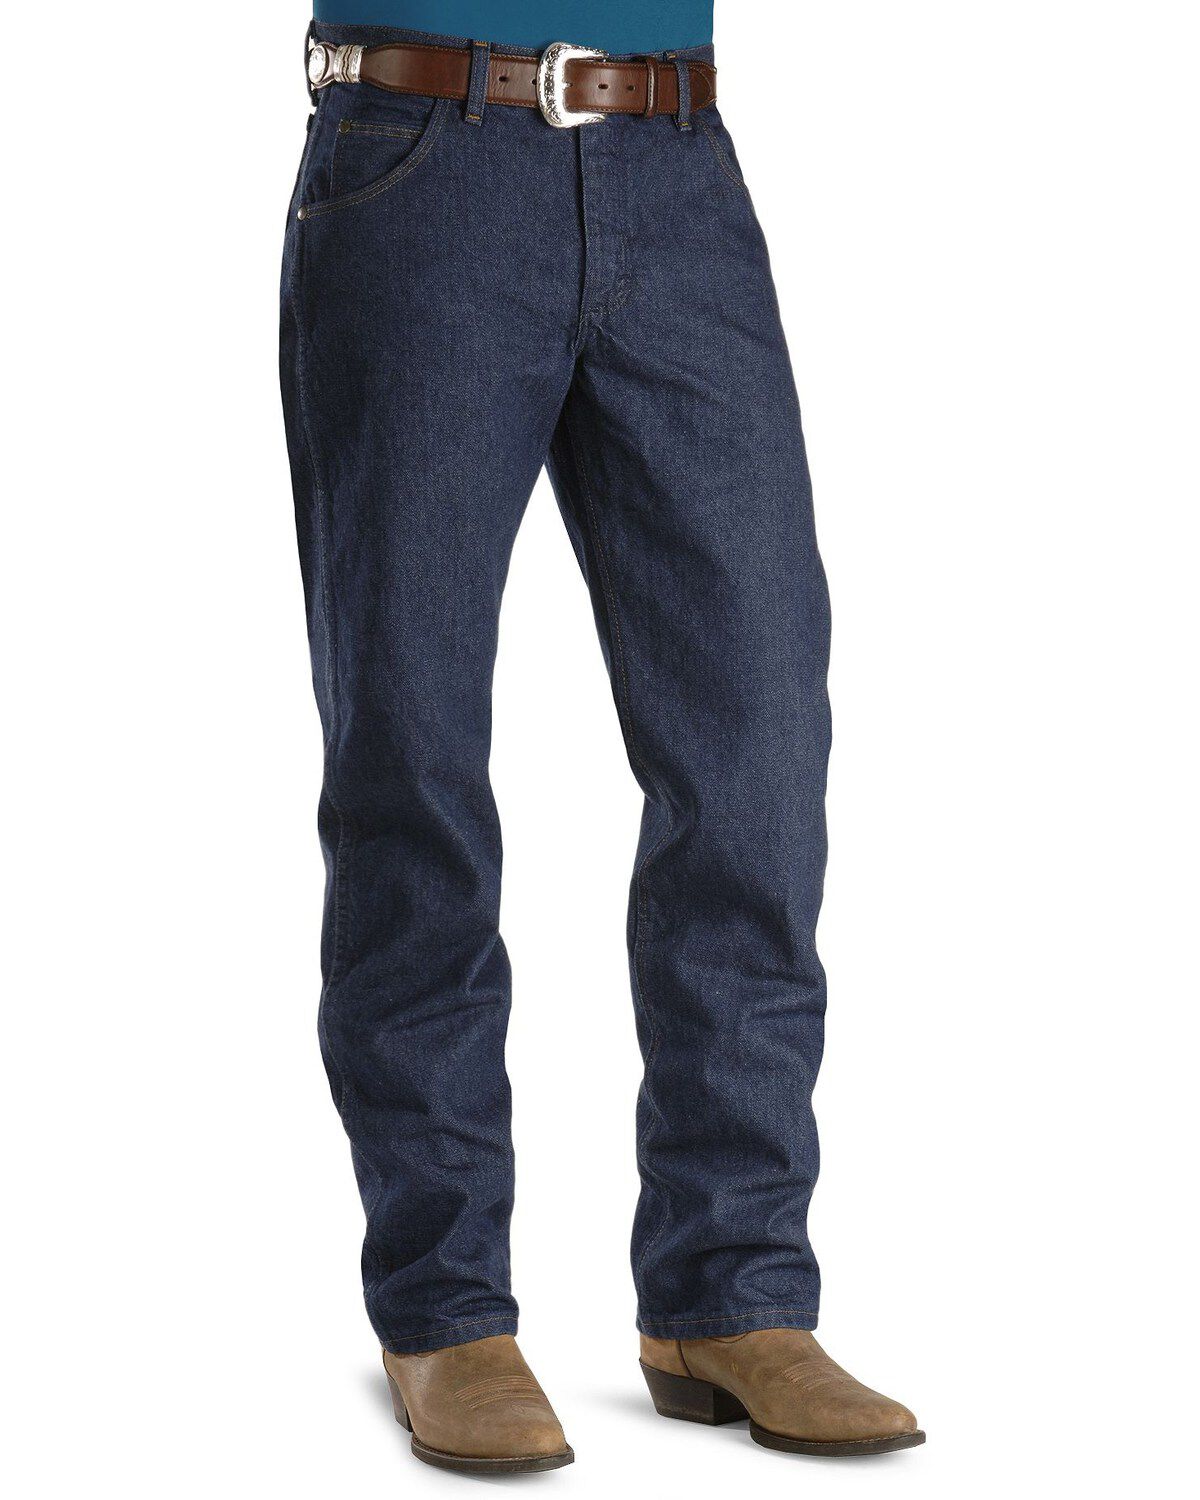 47MWZPW Wrangler Men/'s Premium Performance Cowboy Cut Jeans Prewashed Indigo NEW